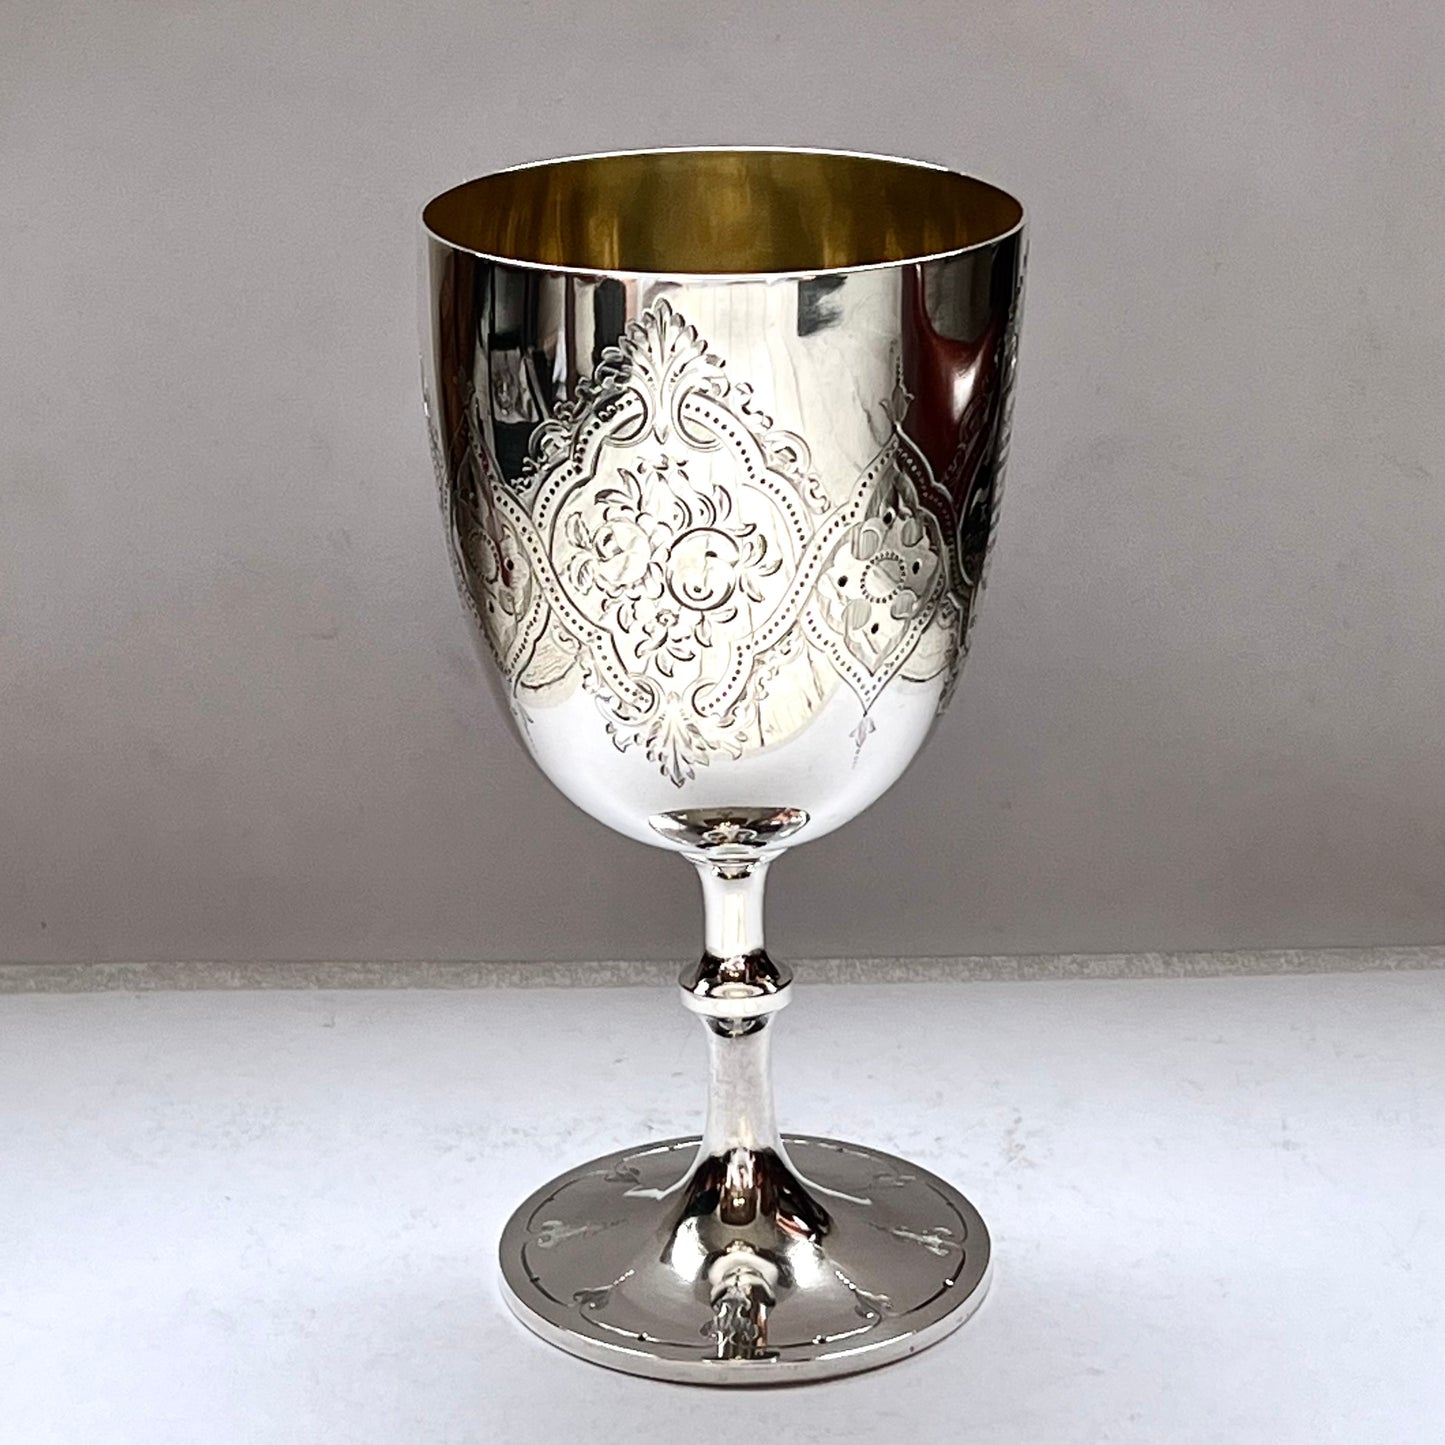 Rare early Australian Colonial sterling silver Fine Woolled Ram trophy cup, NSW merino memorabilia. Thomas Smily, 1864, London.